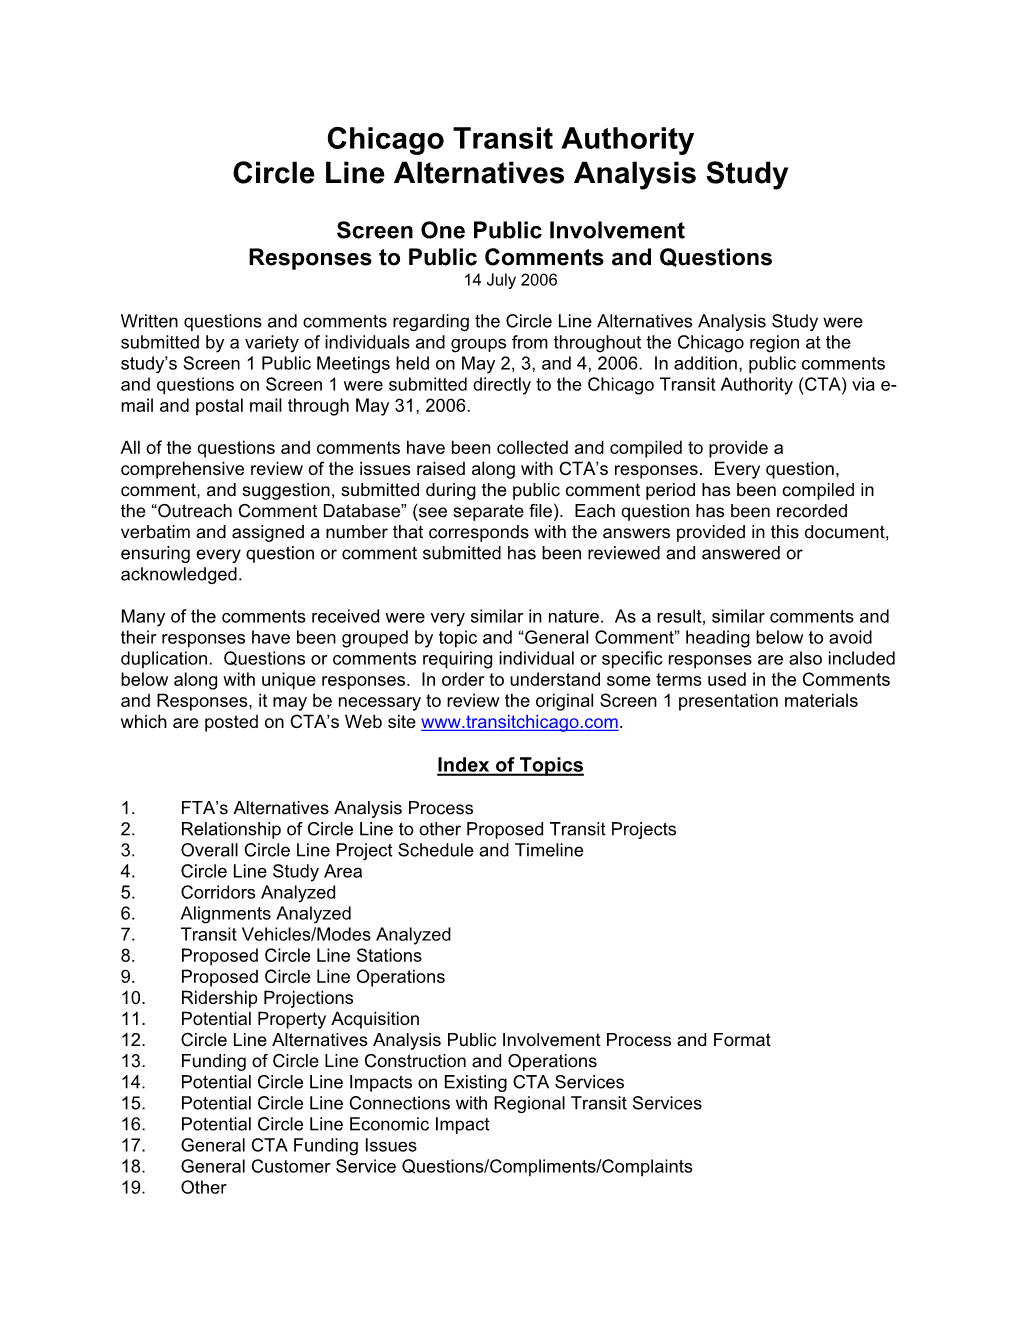 Chicago Transit Authority Circle Line Alternatives Analysis Study